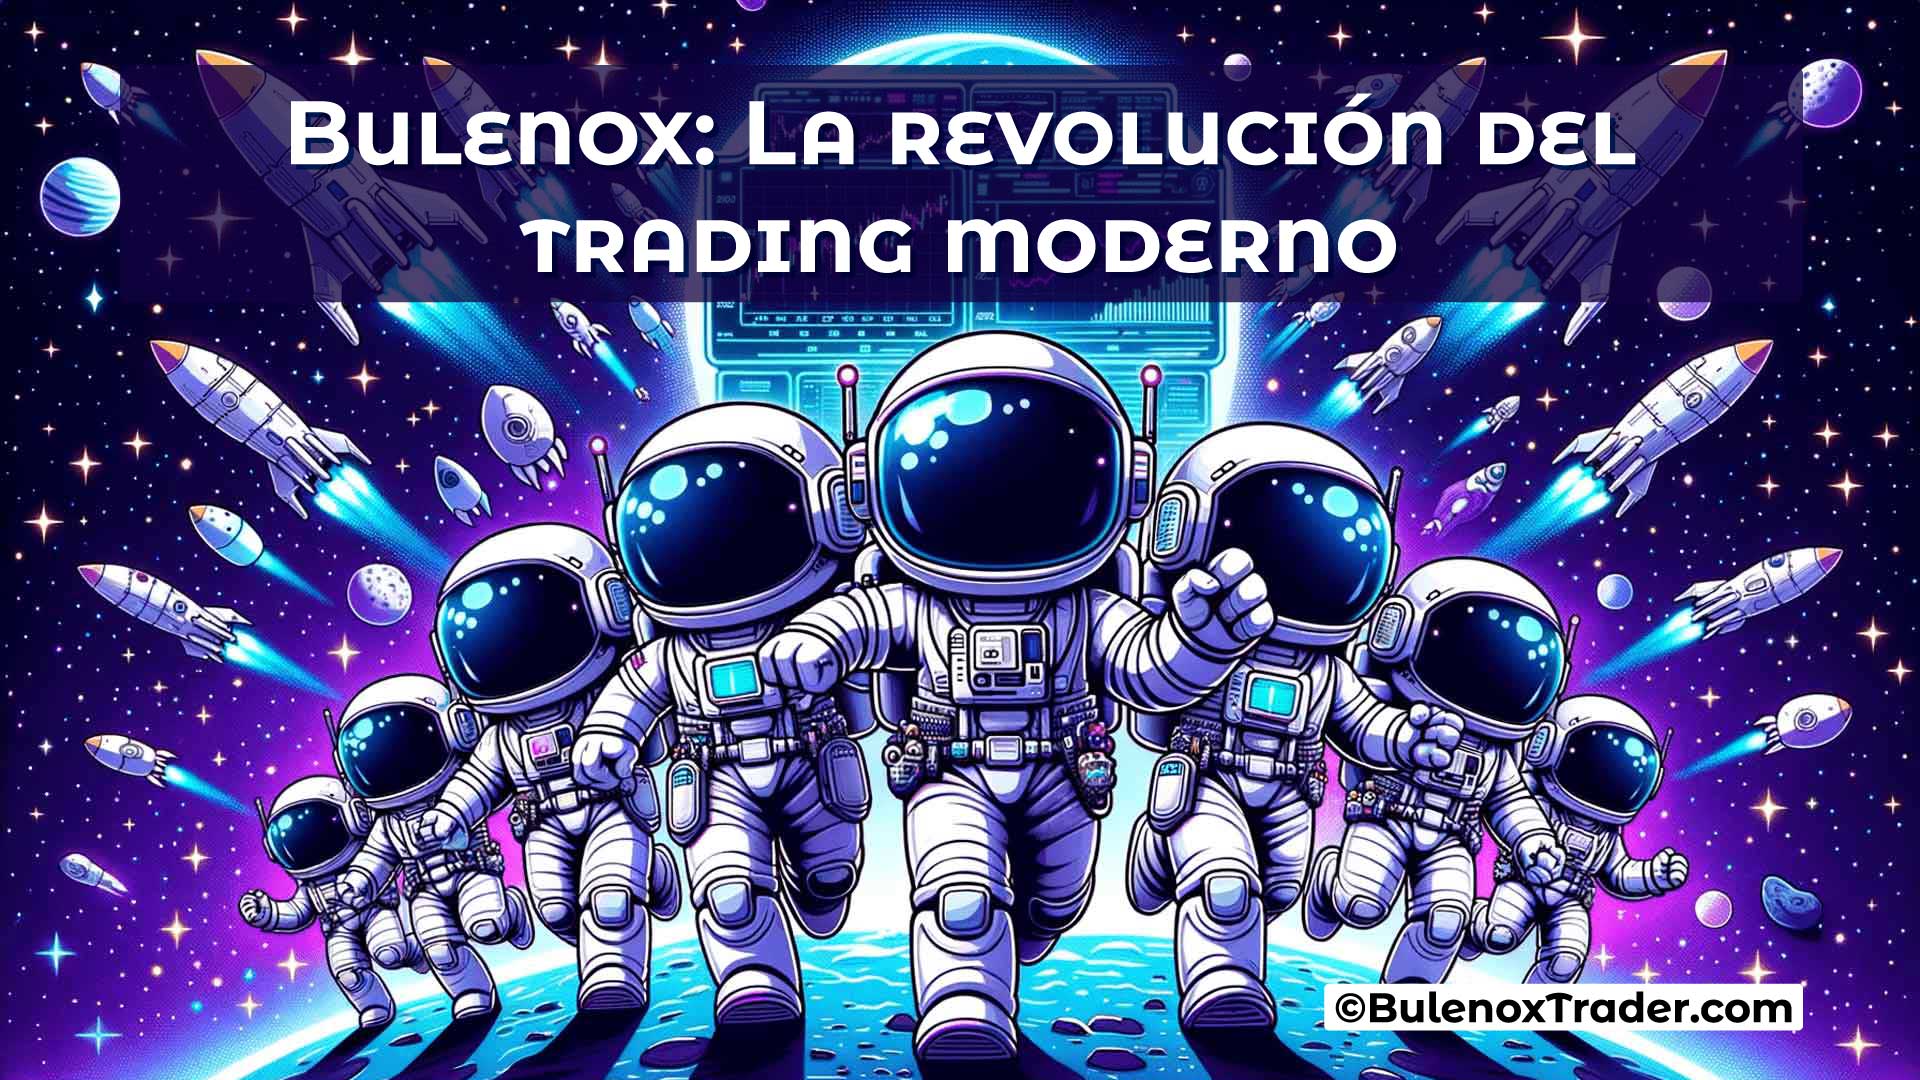 Bulenox-La-revolución-del-trading-moderno-on-Bulenox-Trader-Website